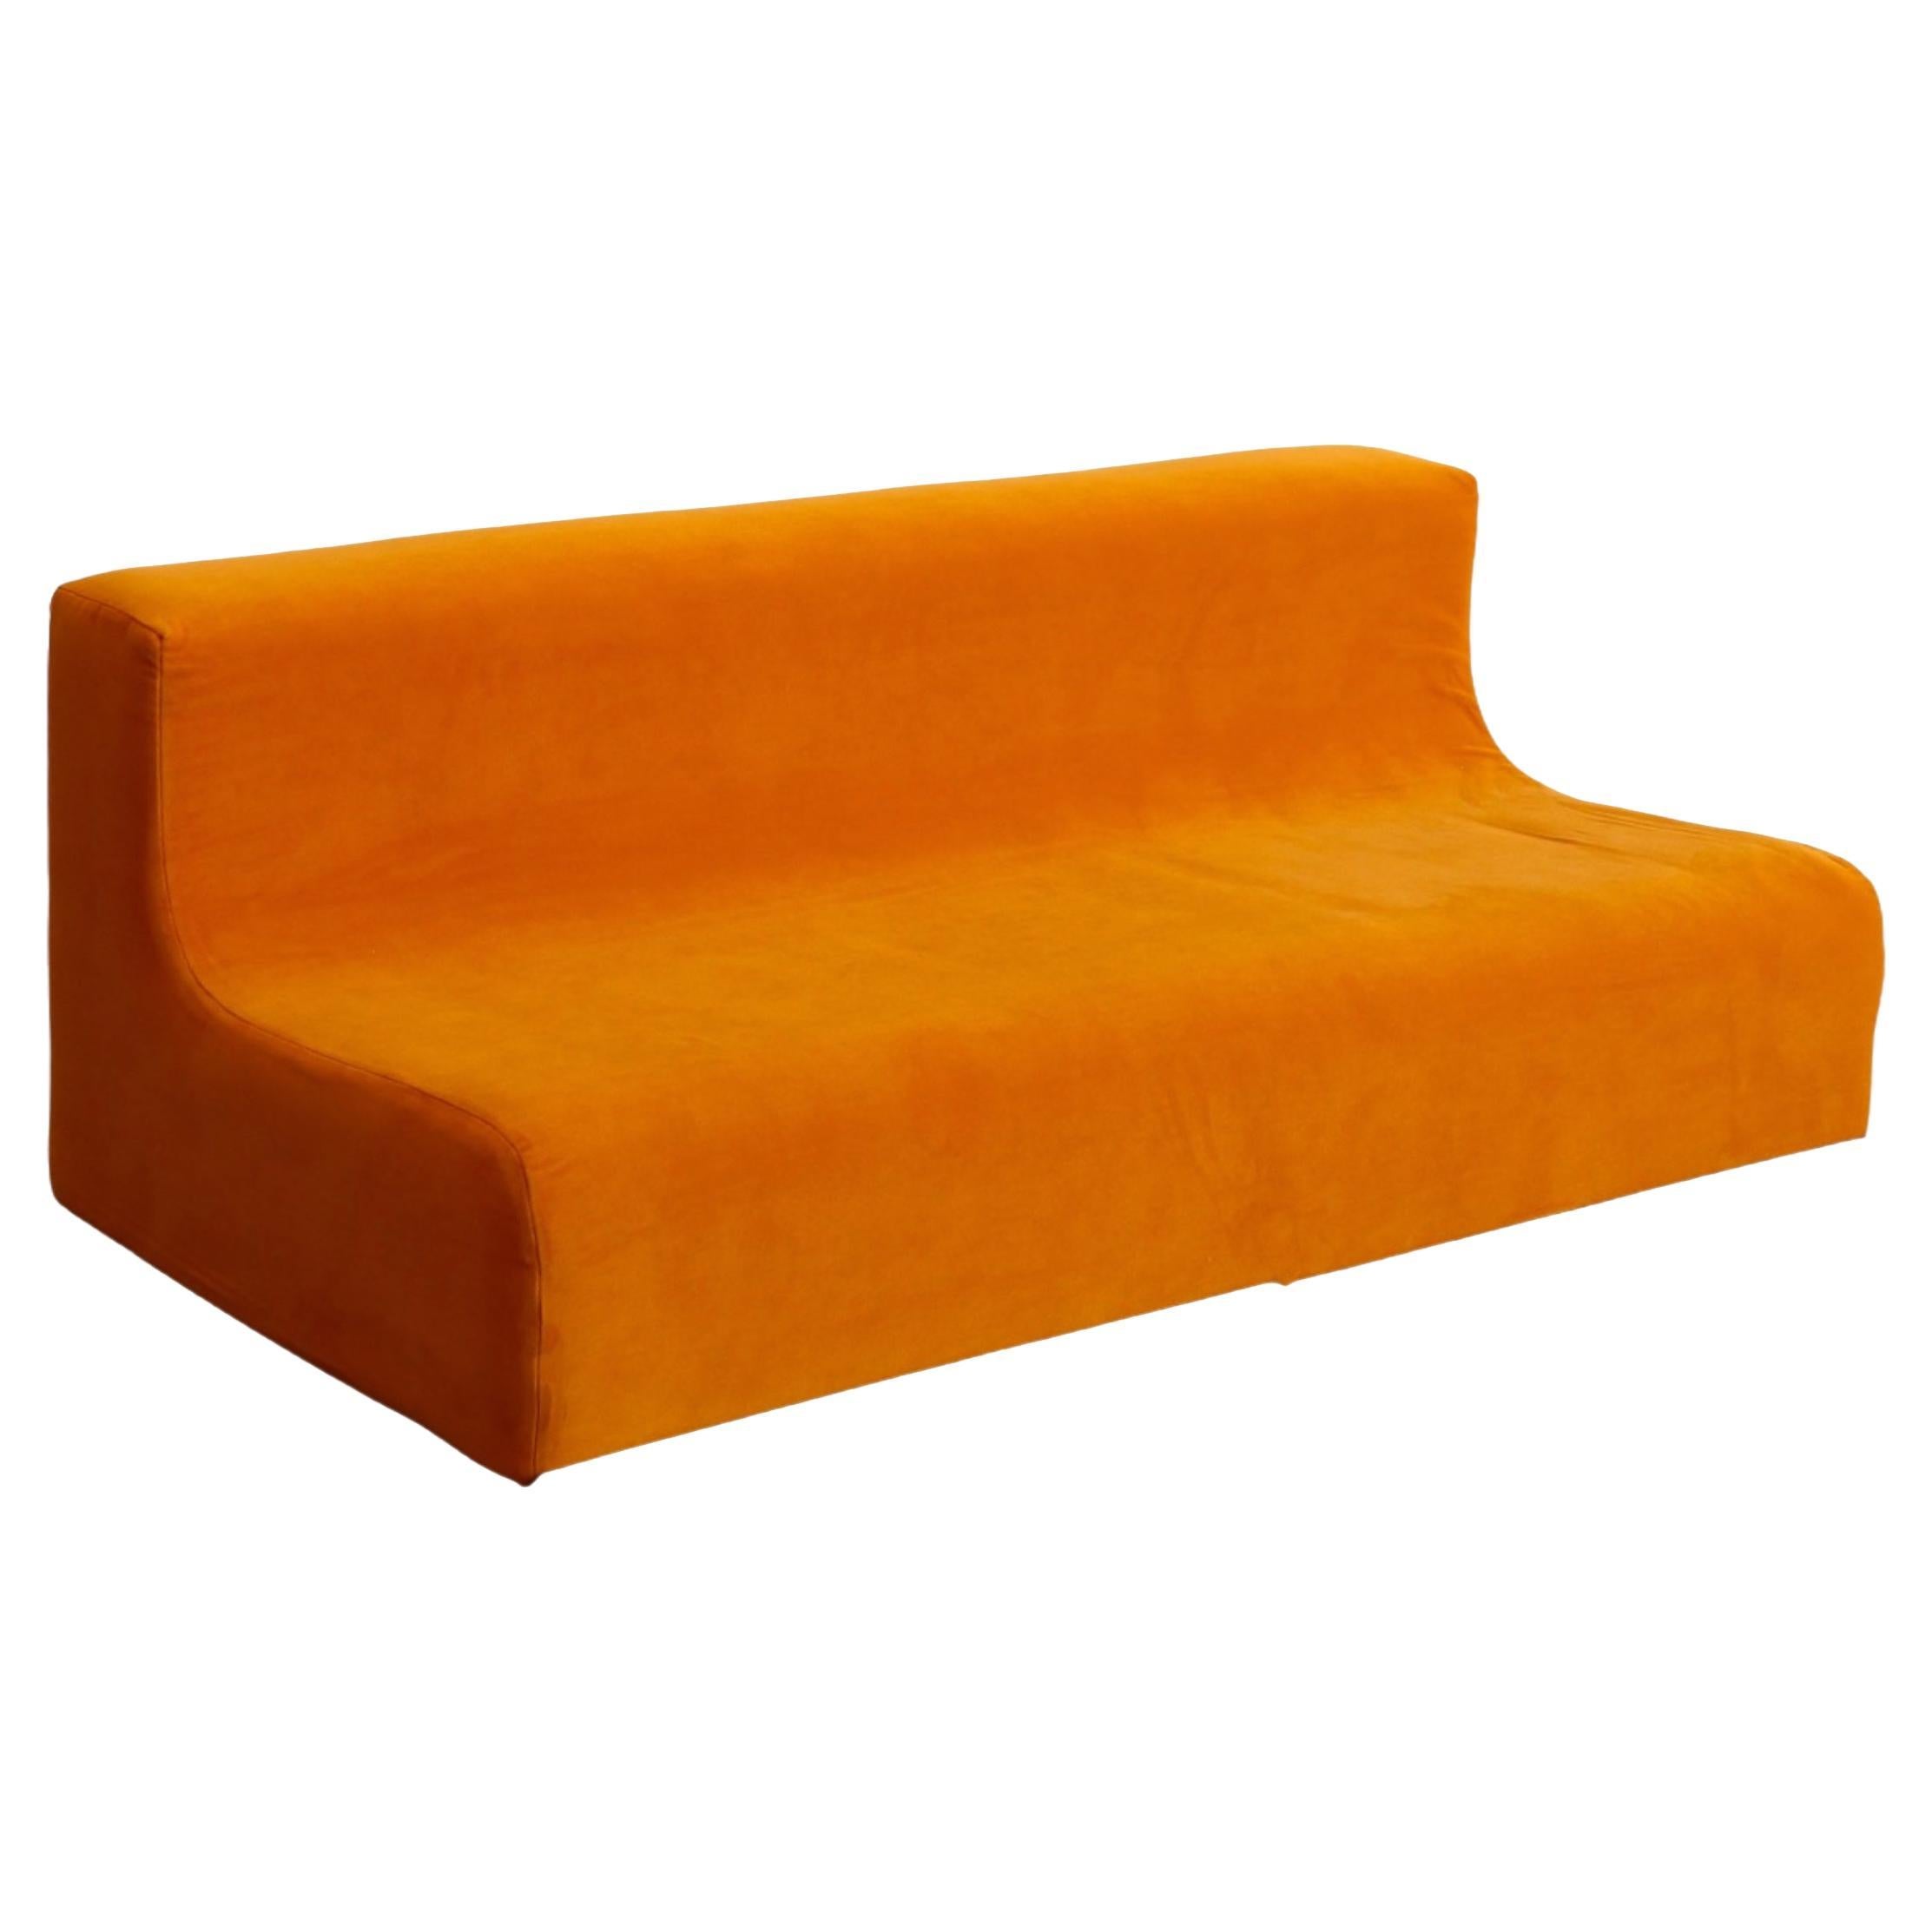 Space Age Three Seater Orange Sofa For Sale